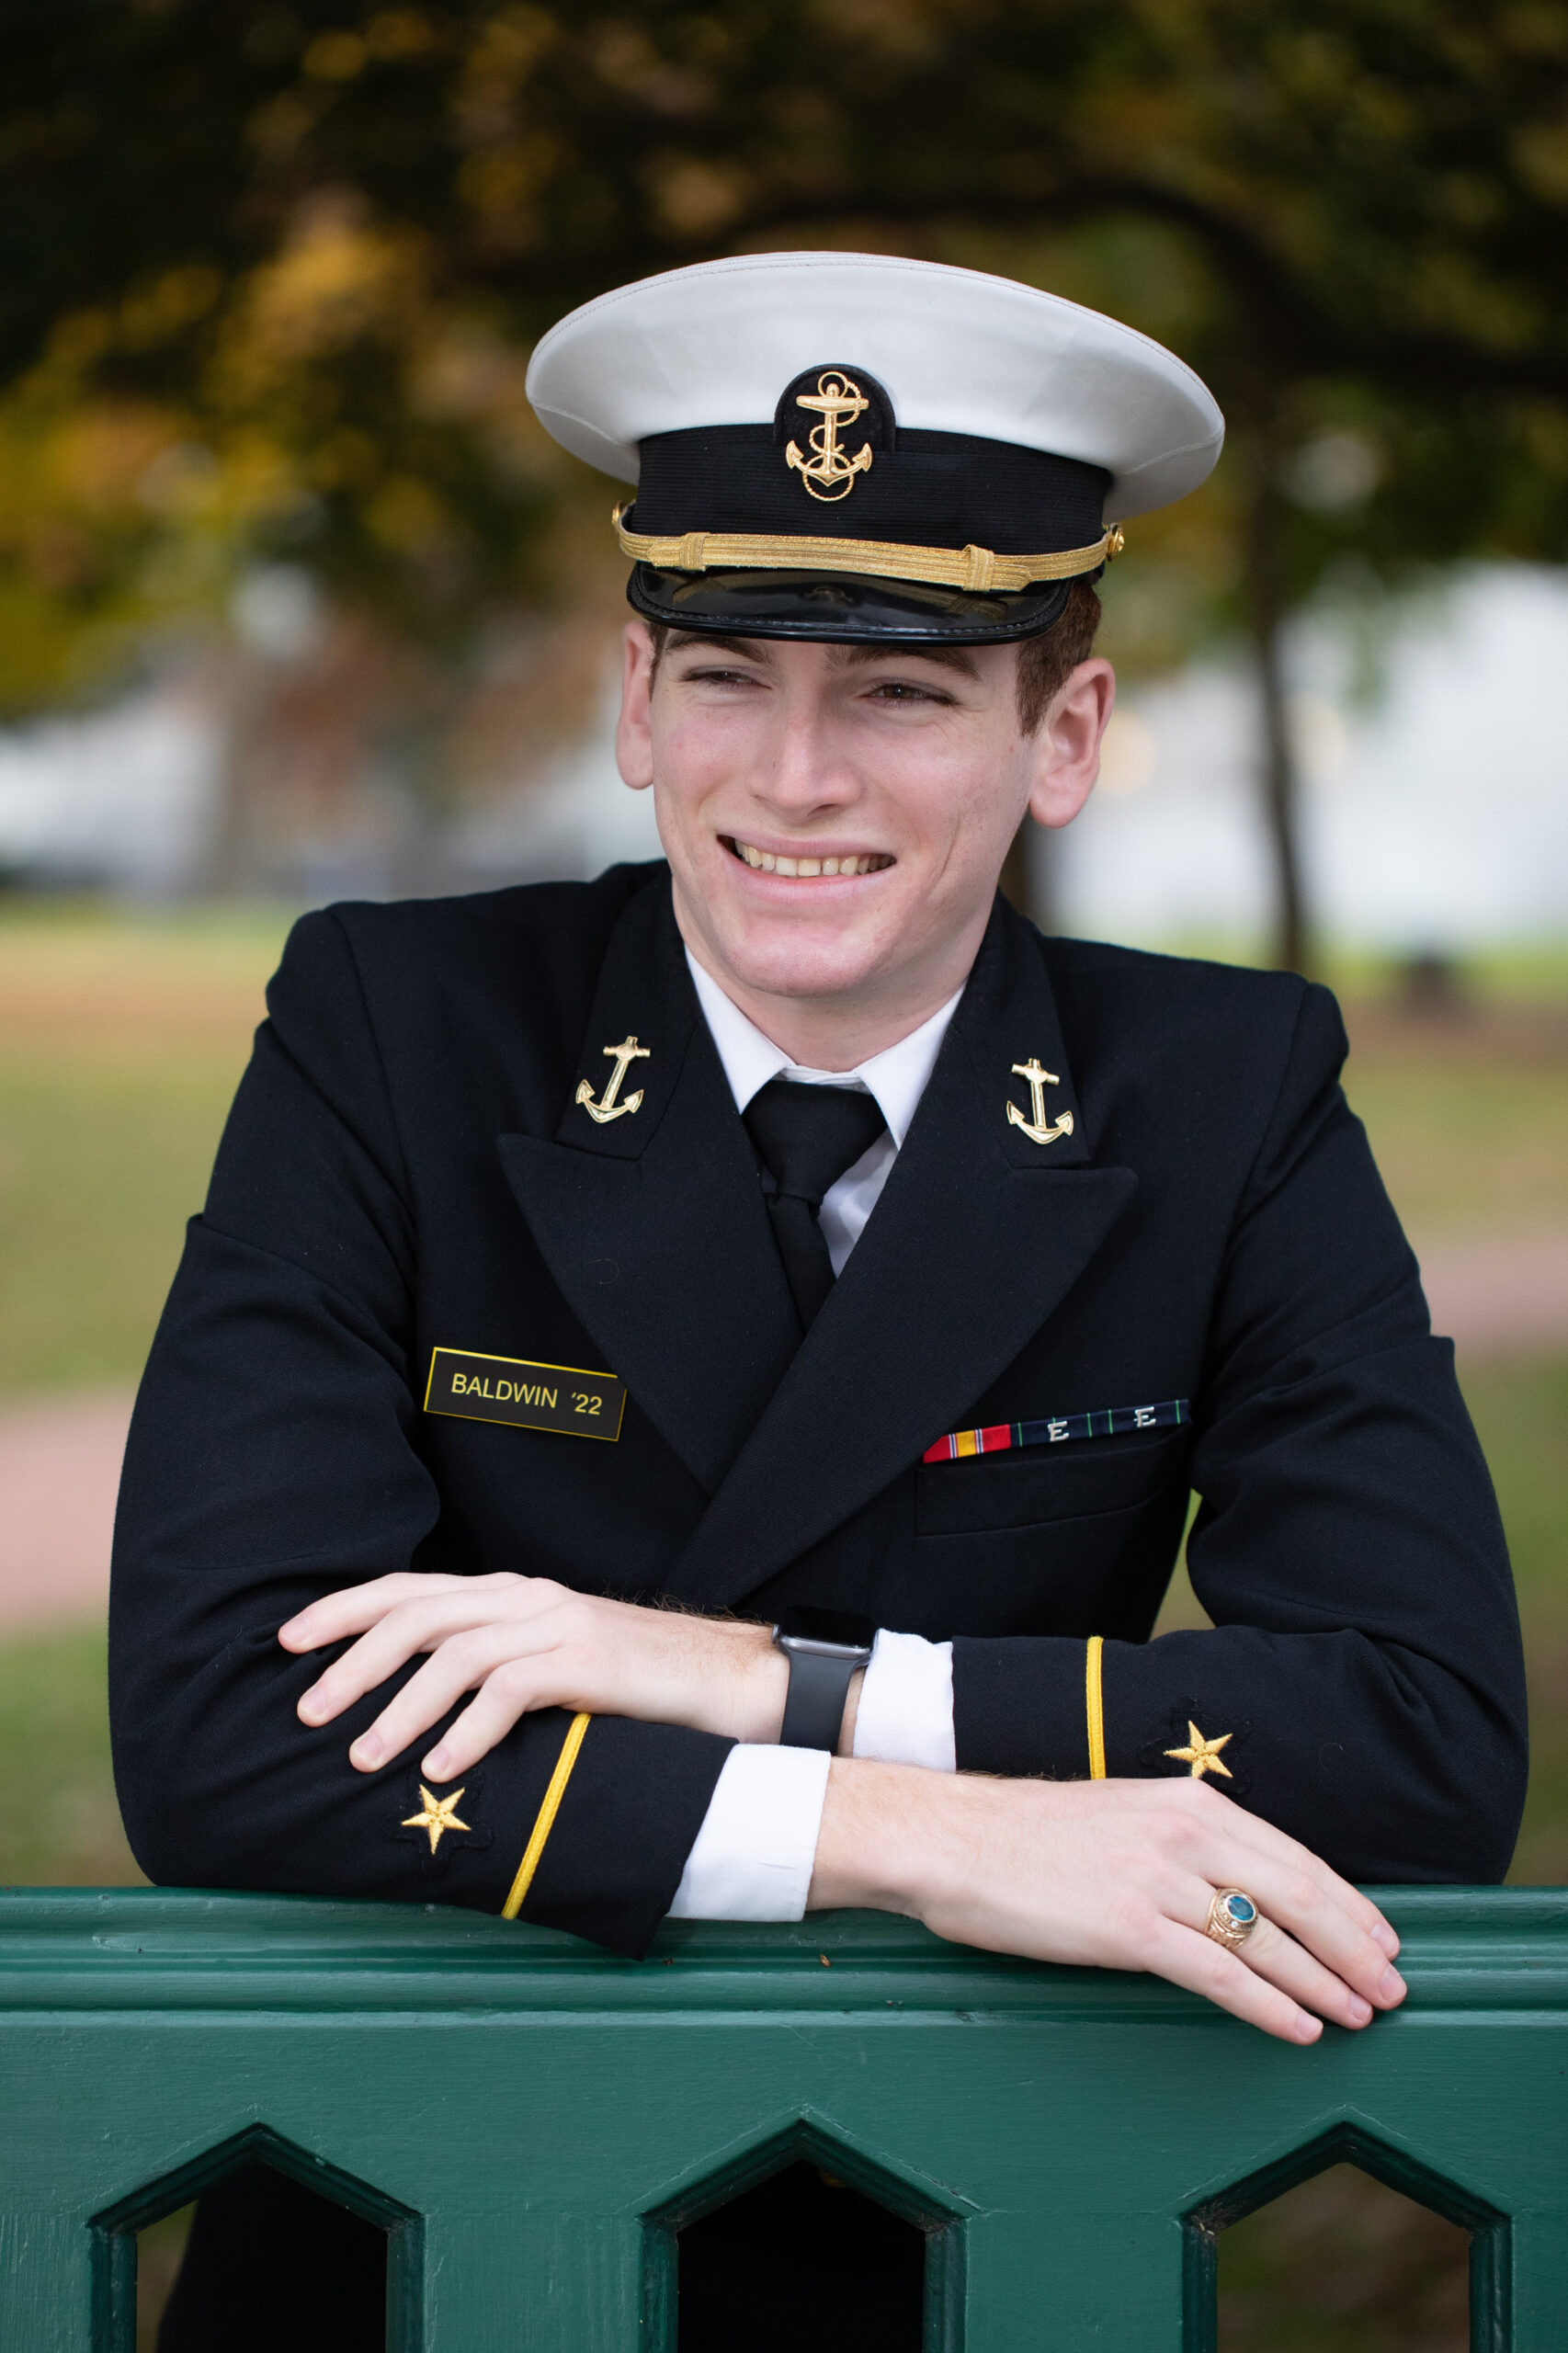 USNA Midshipman senior photo in Annapolis, Maryland by Kelly Eskelsen.